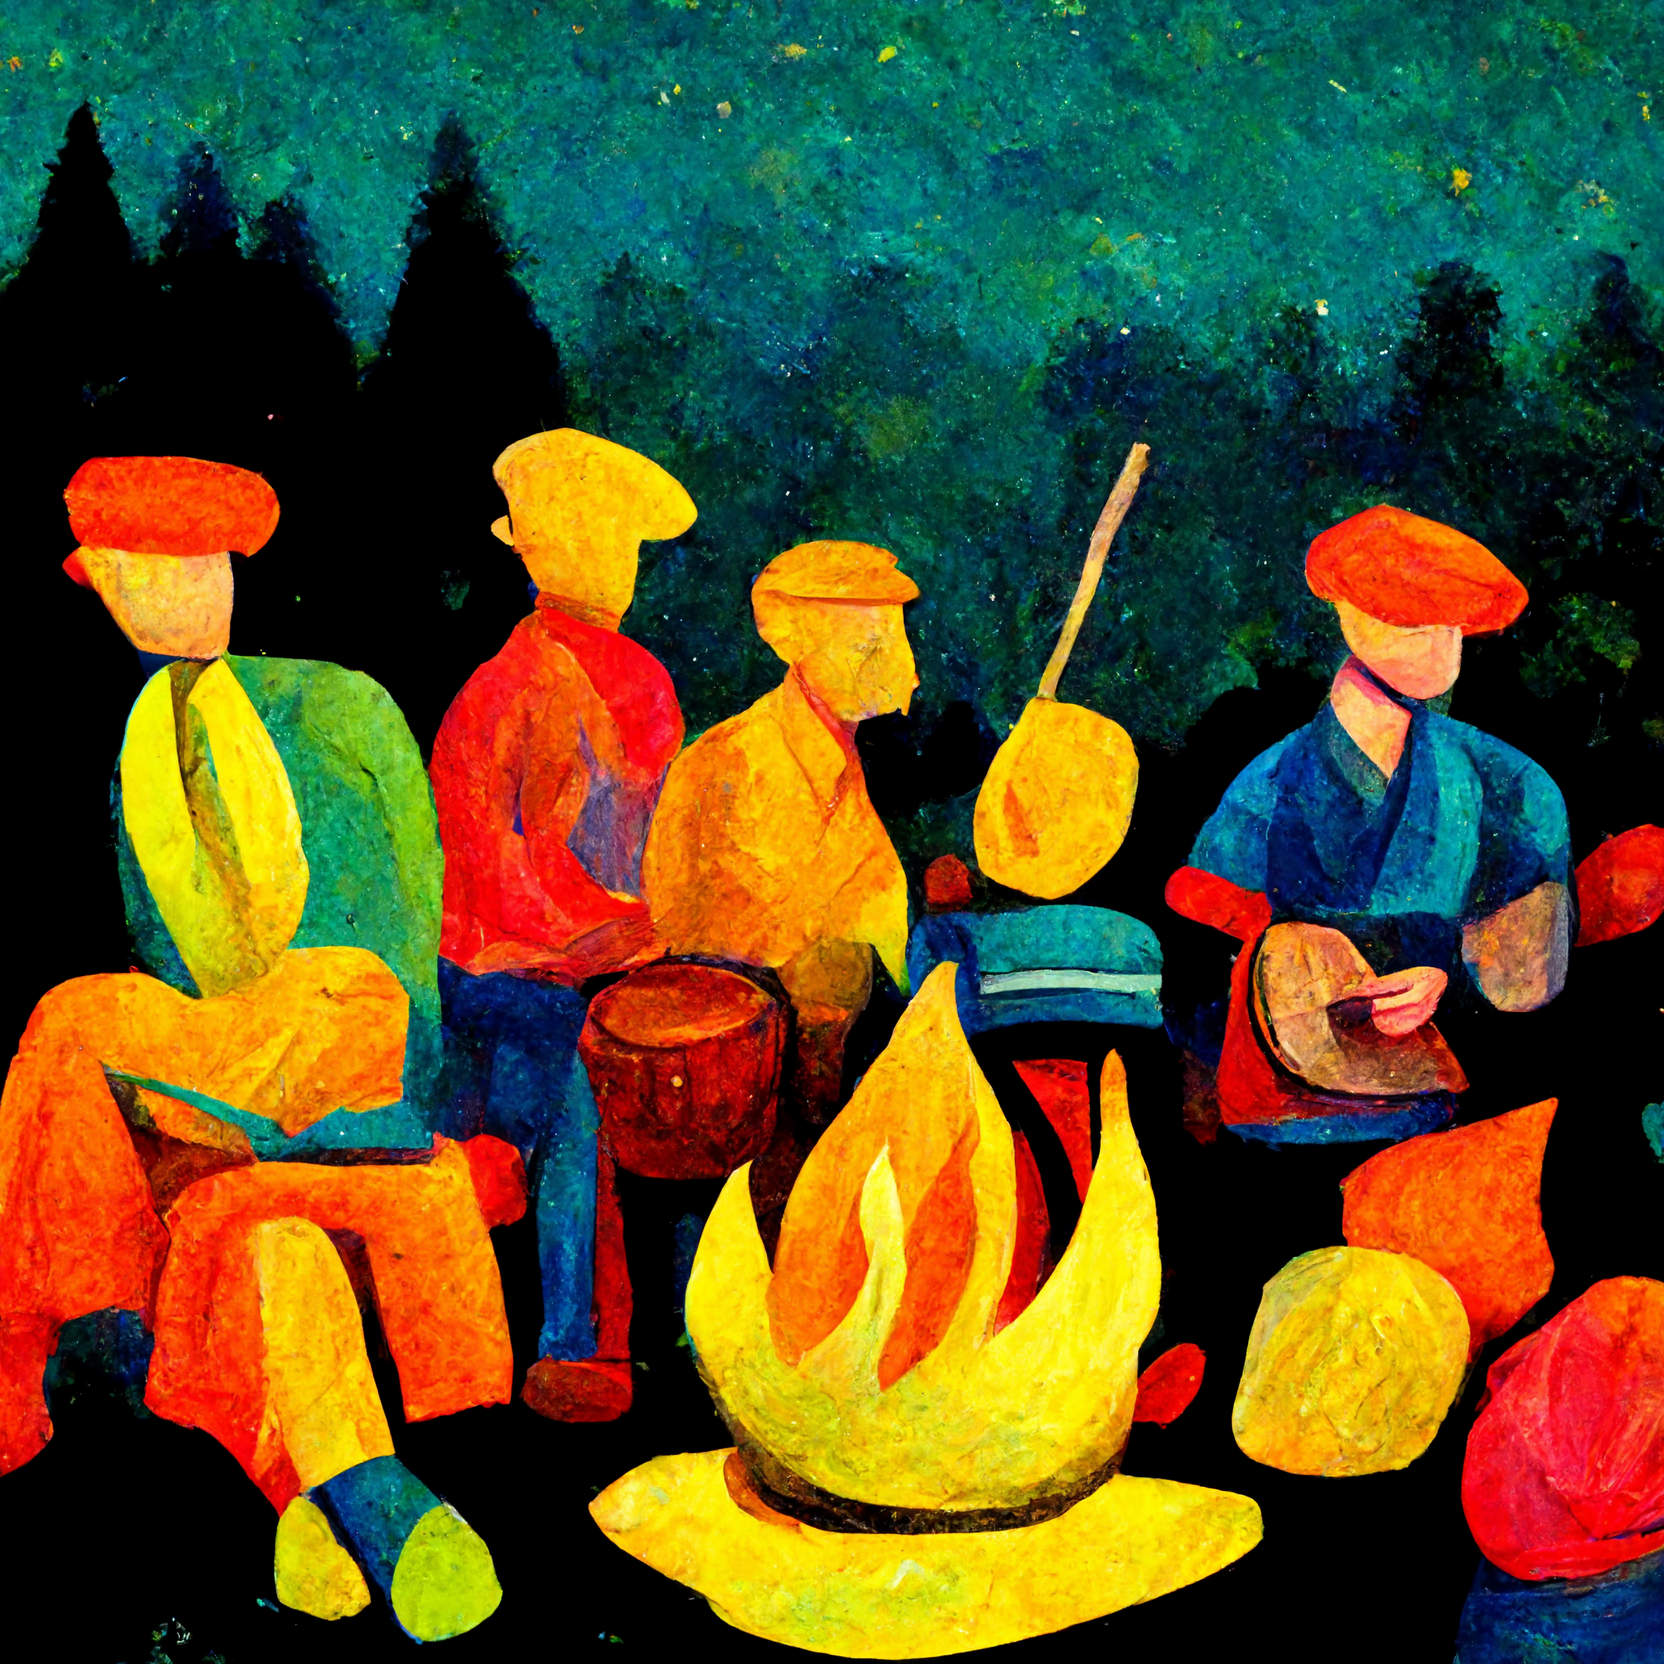 Jindra_bright_colors_cheerful_musicians_campfire_van_gogh_b57ad283-deed-4390-8229-852a88694738